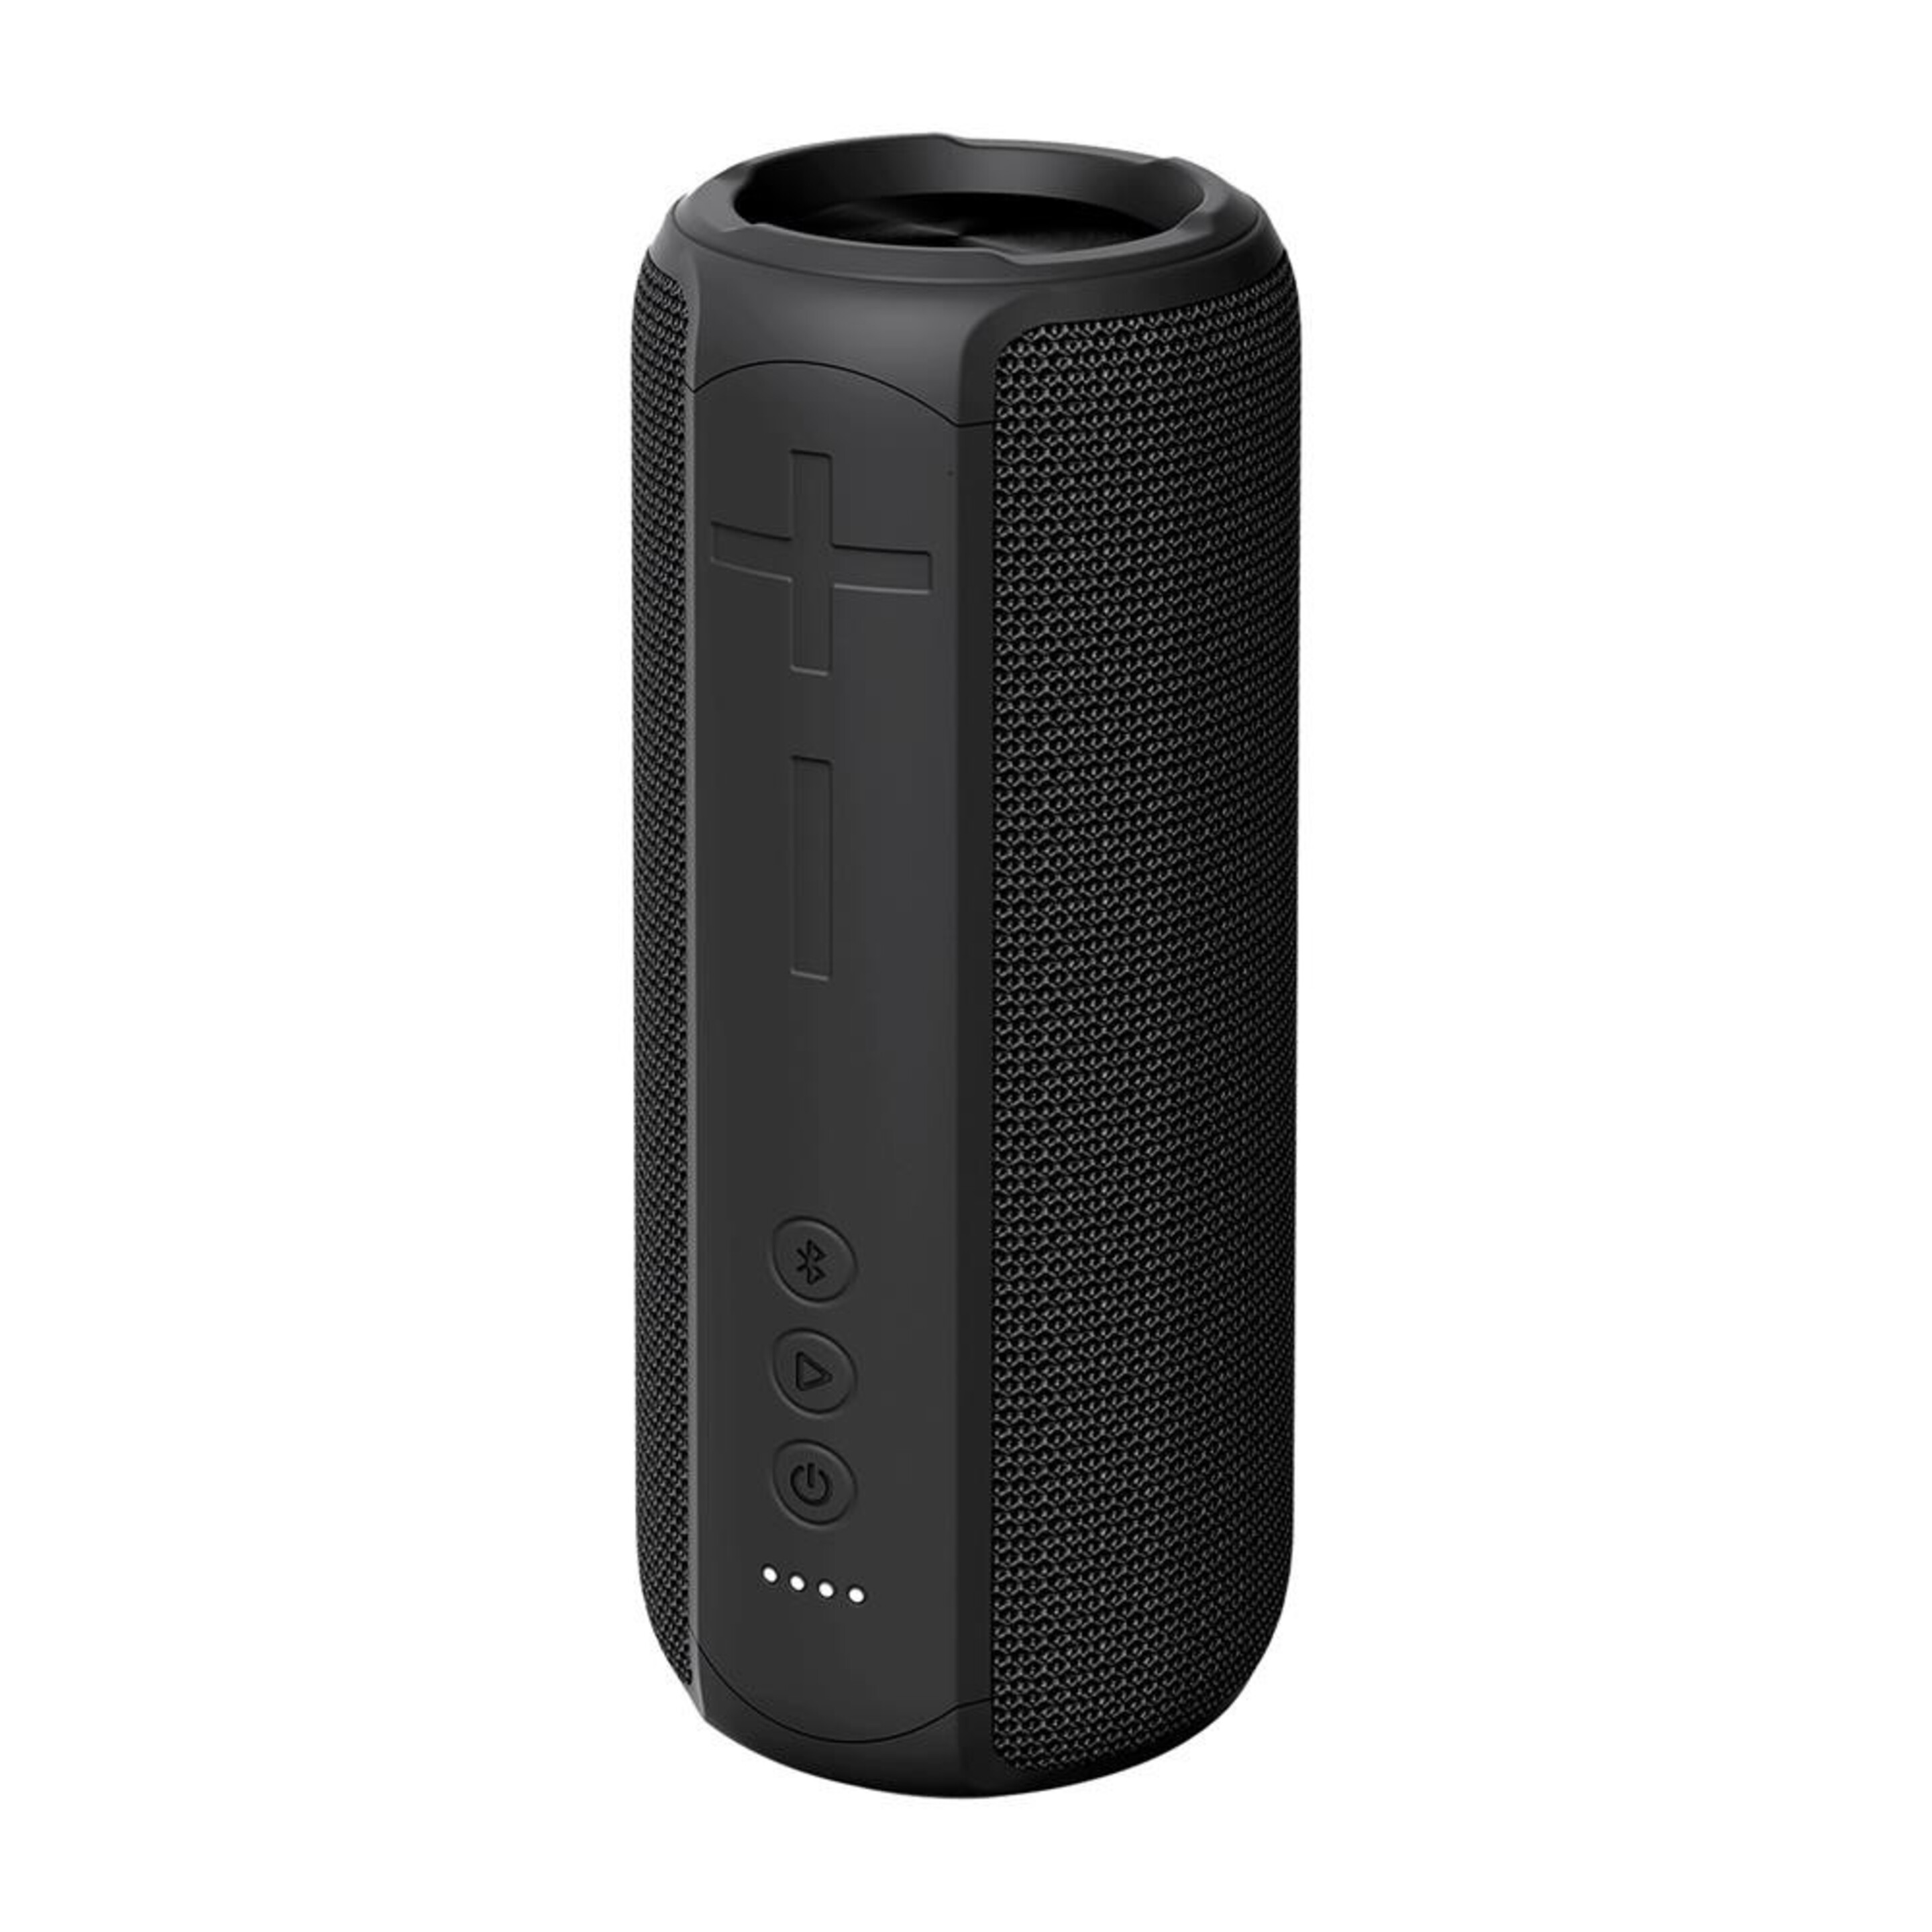 Speaker Bluetooth Forever Toob 30 Plus Bs-960